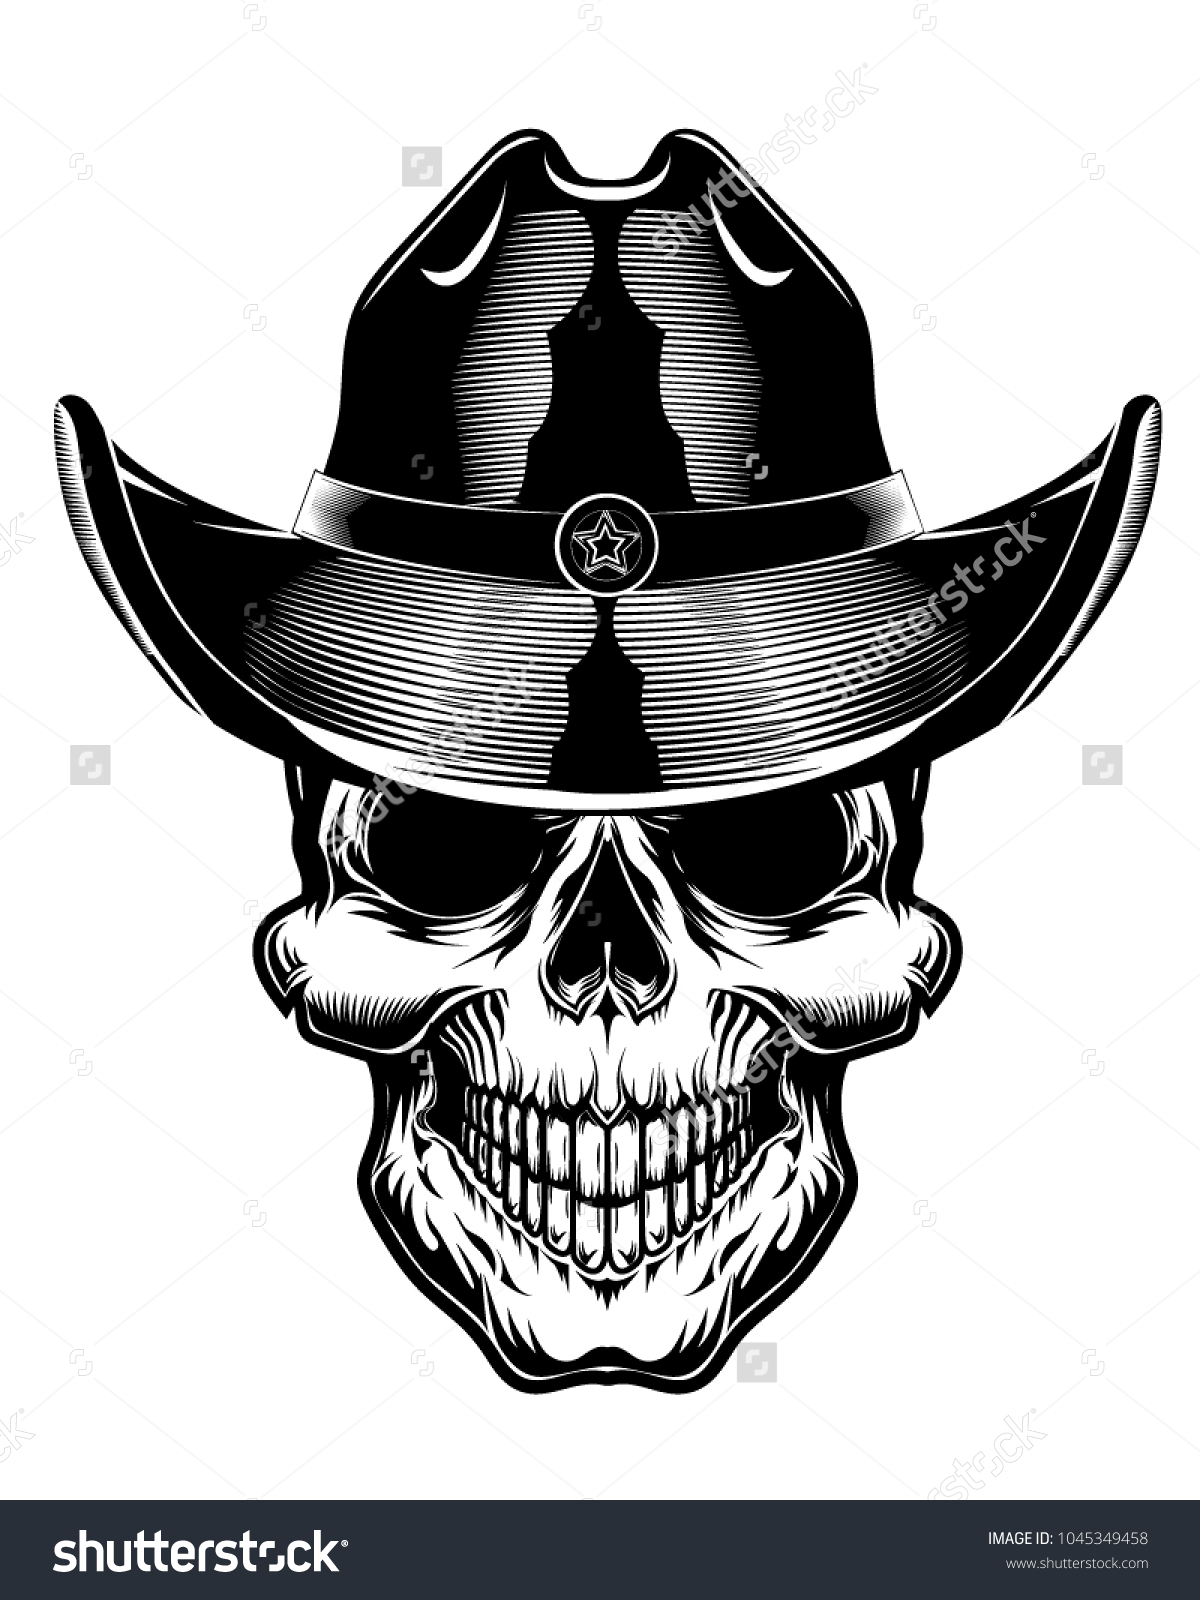 Cowboy Skull Monochrome Vector Illustration Stock Vector (Royalty Free ...